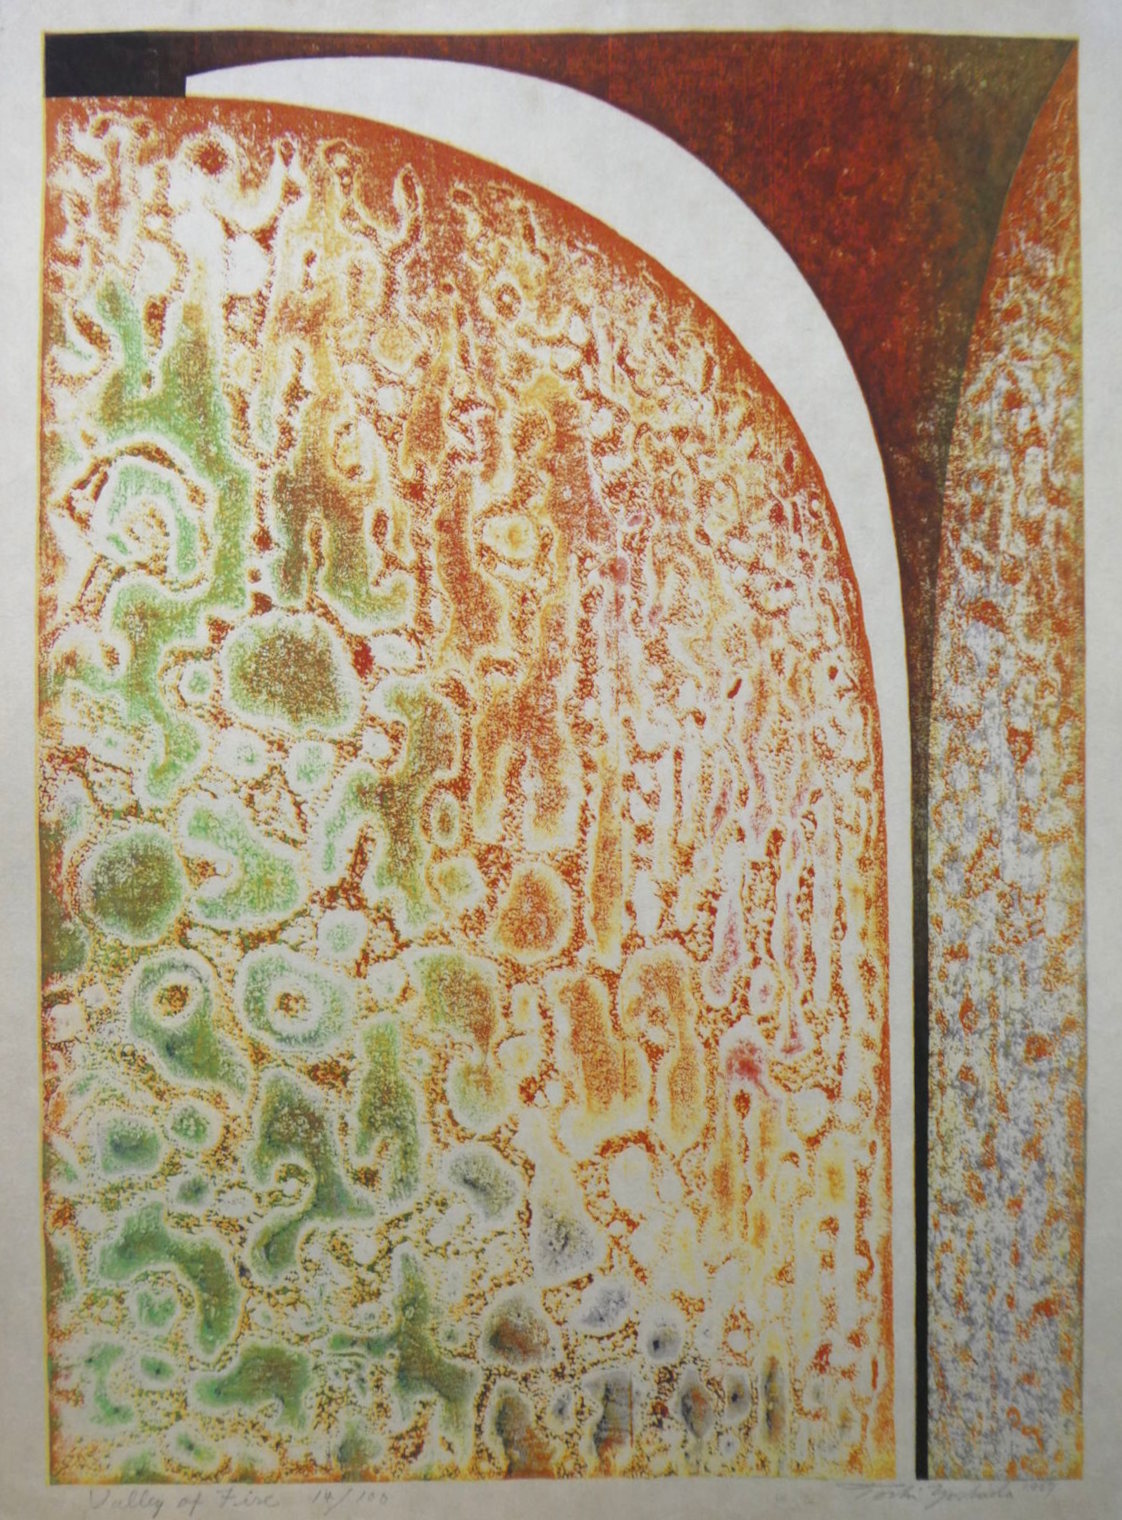 Toshi Yoshida “Valley of Fire” 1967 woodblock print